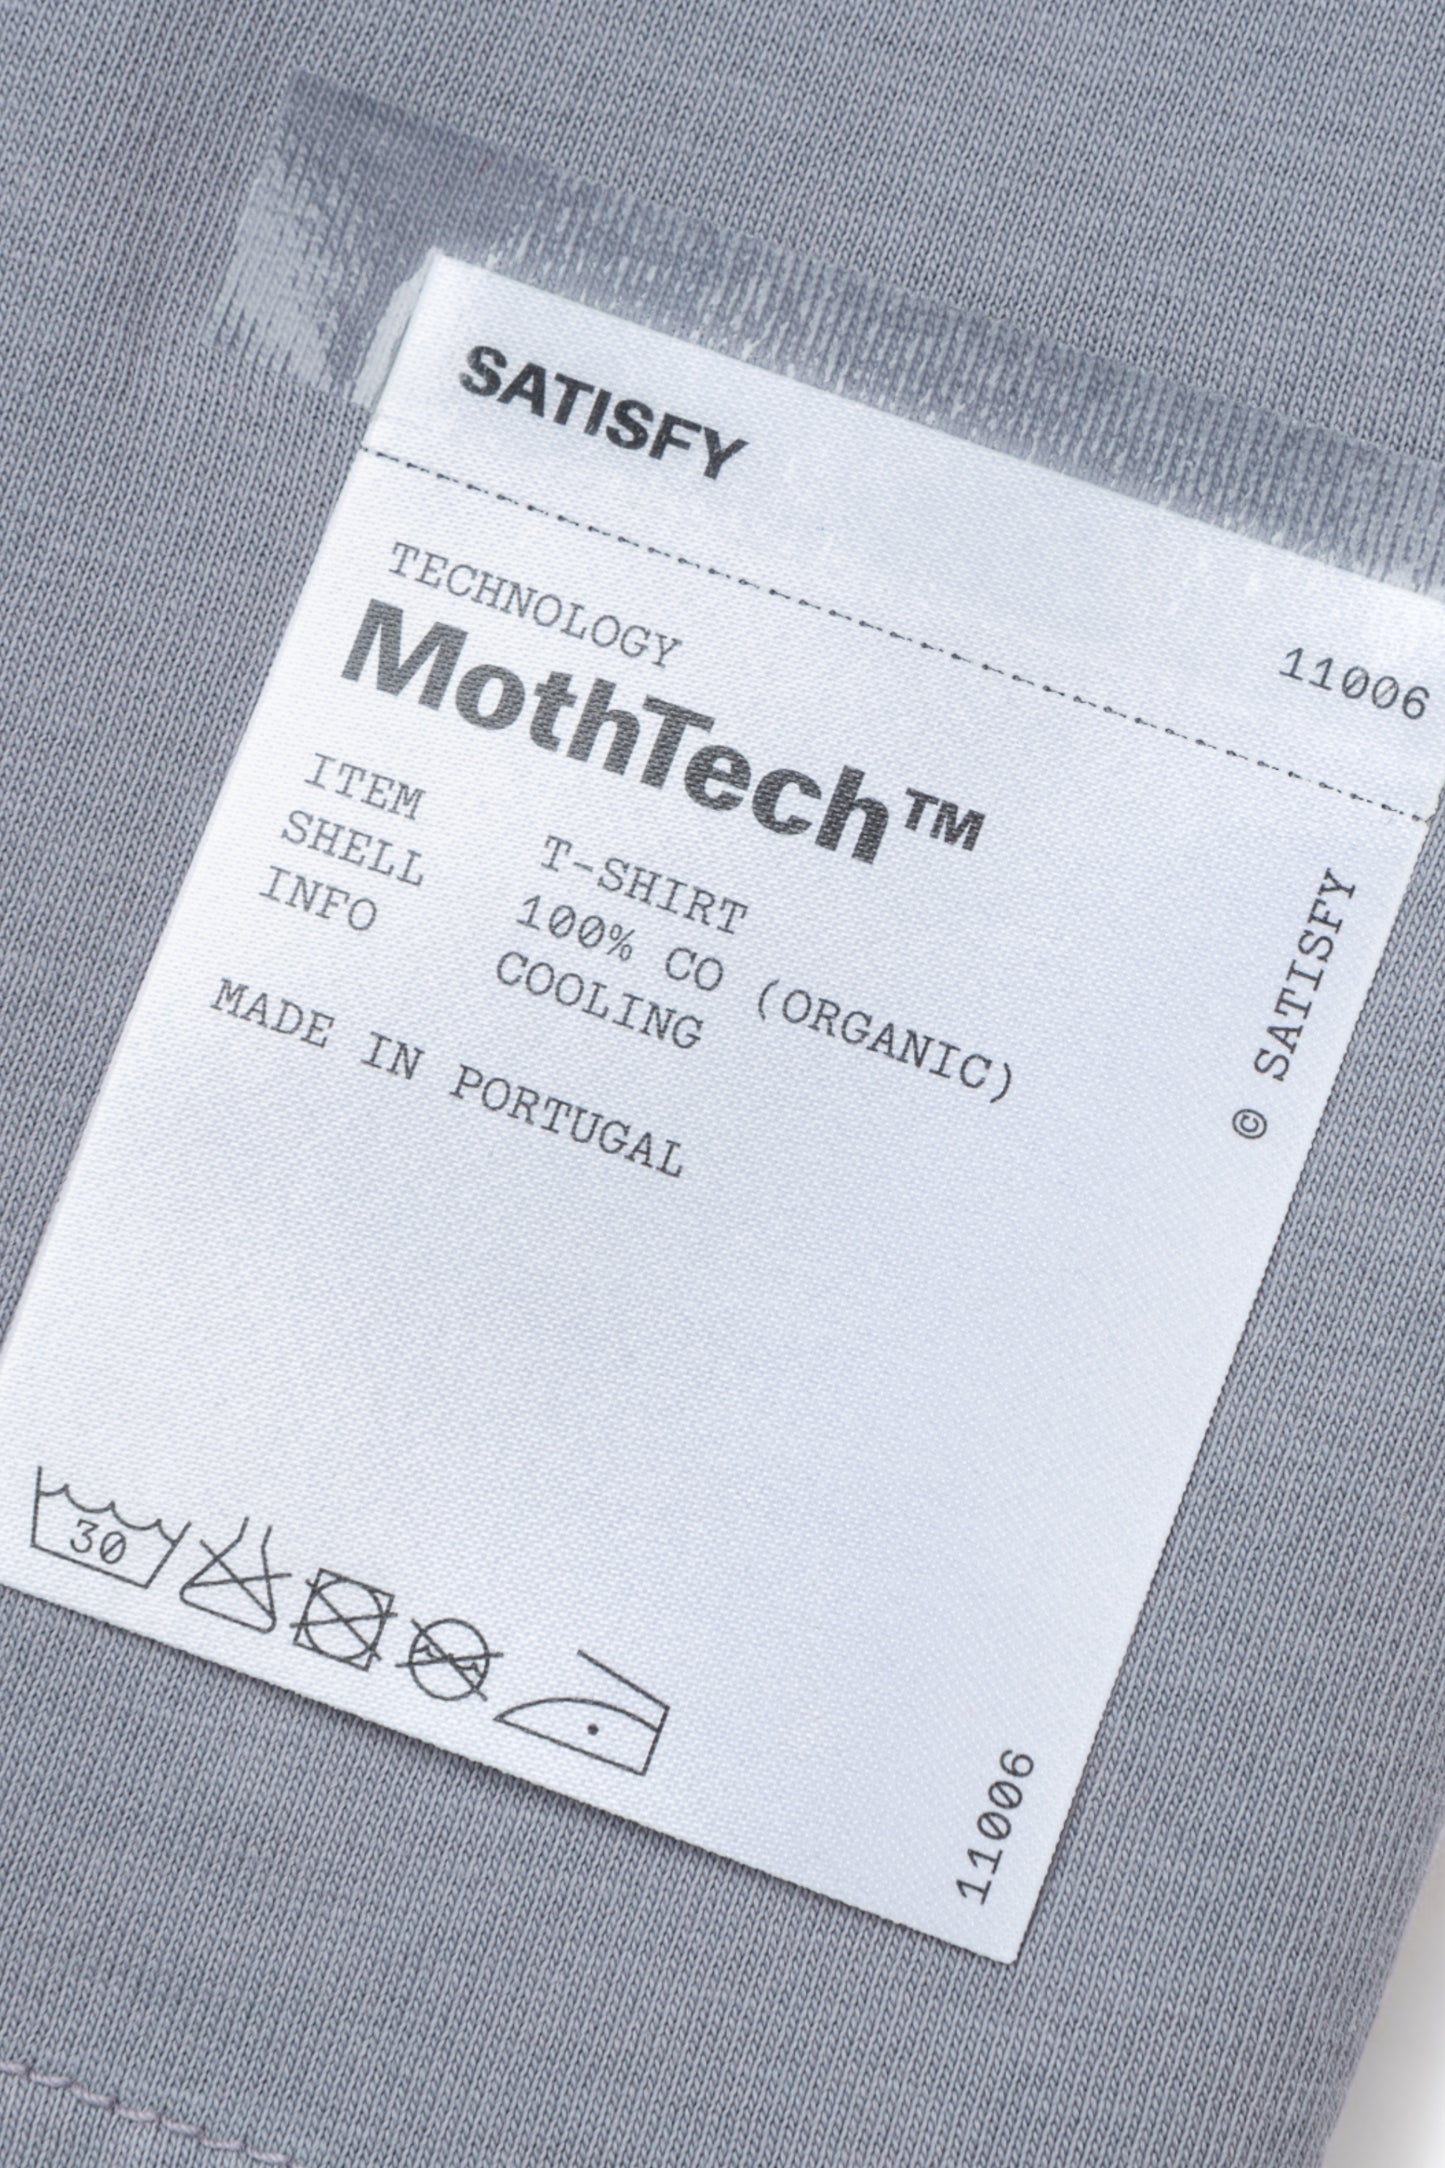 Satisfy - MothTech™ T-Shirt (Aged Quicksilver)